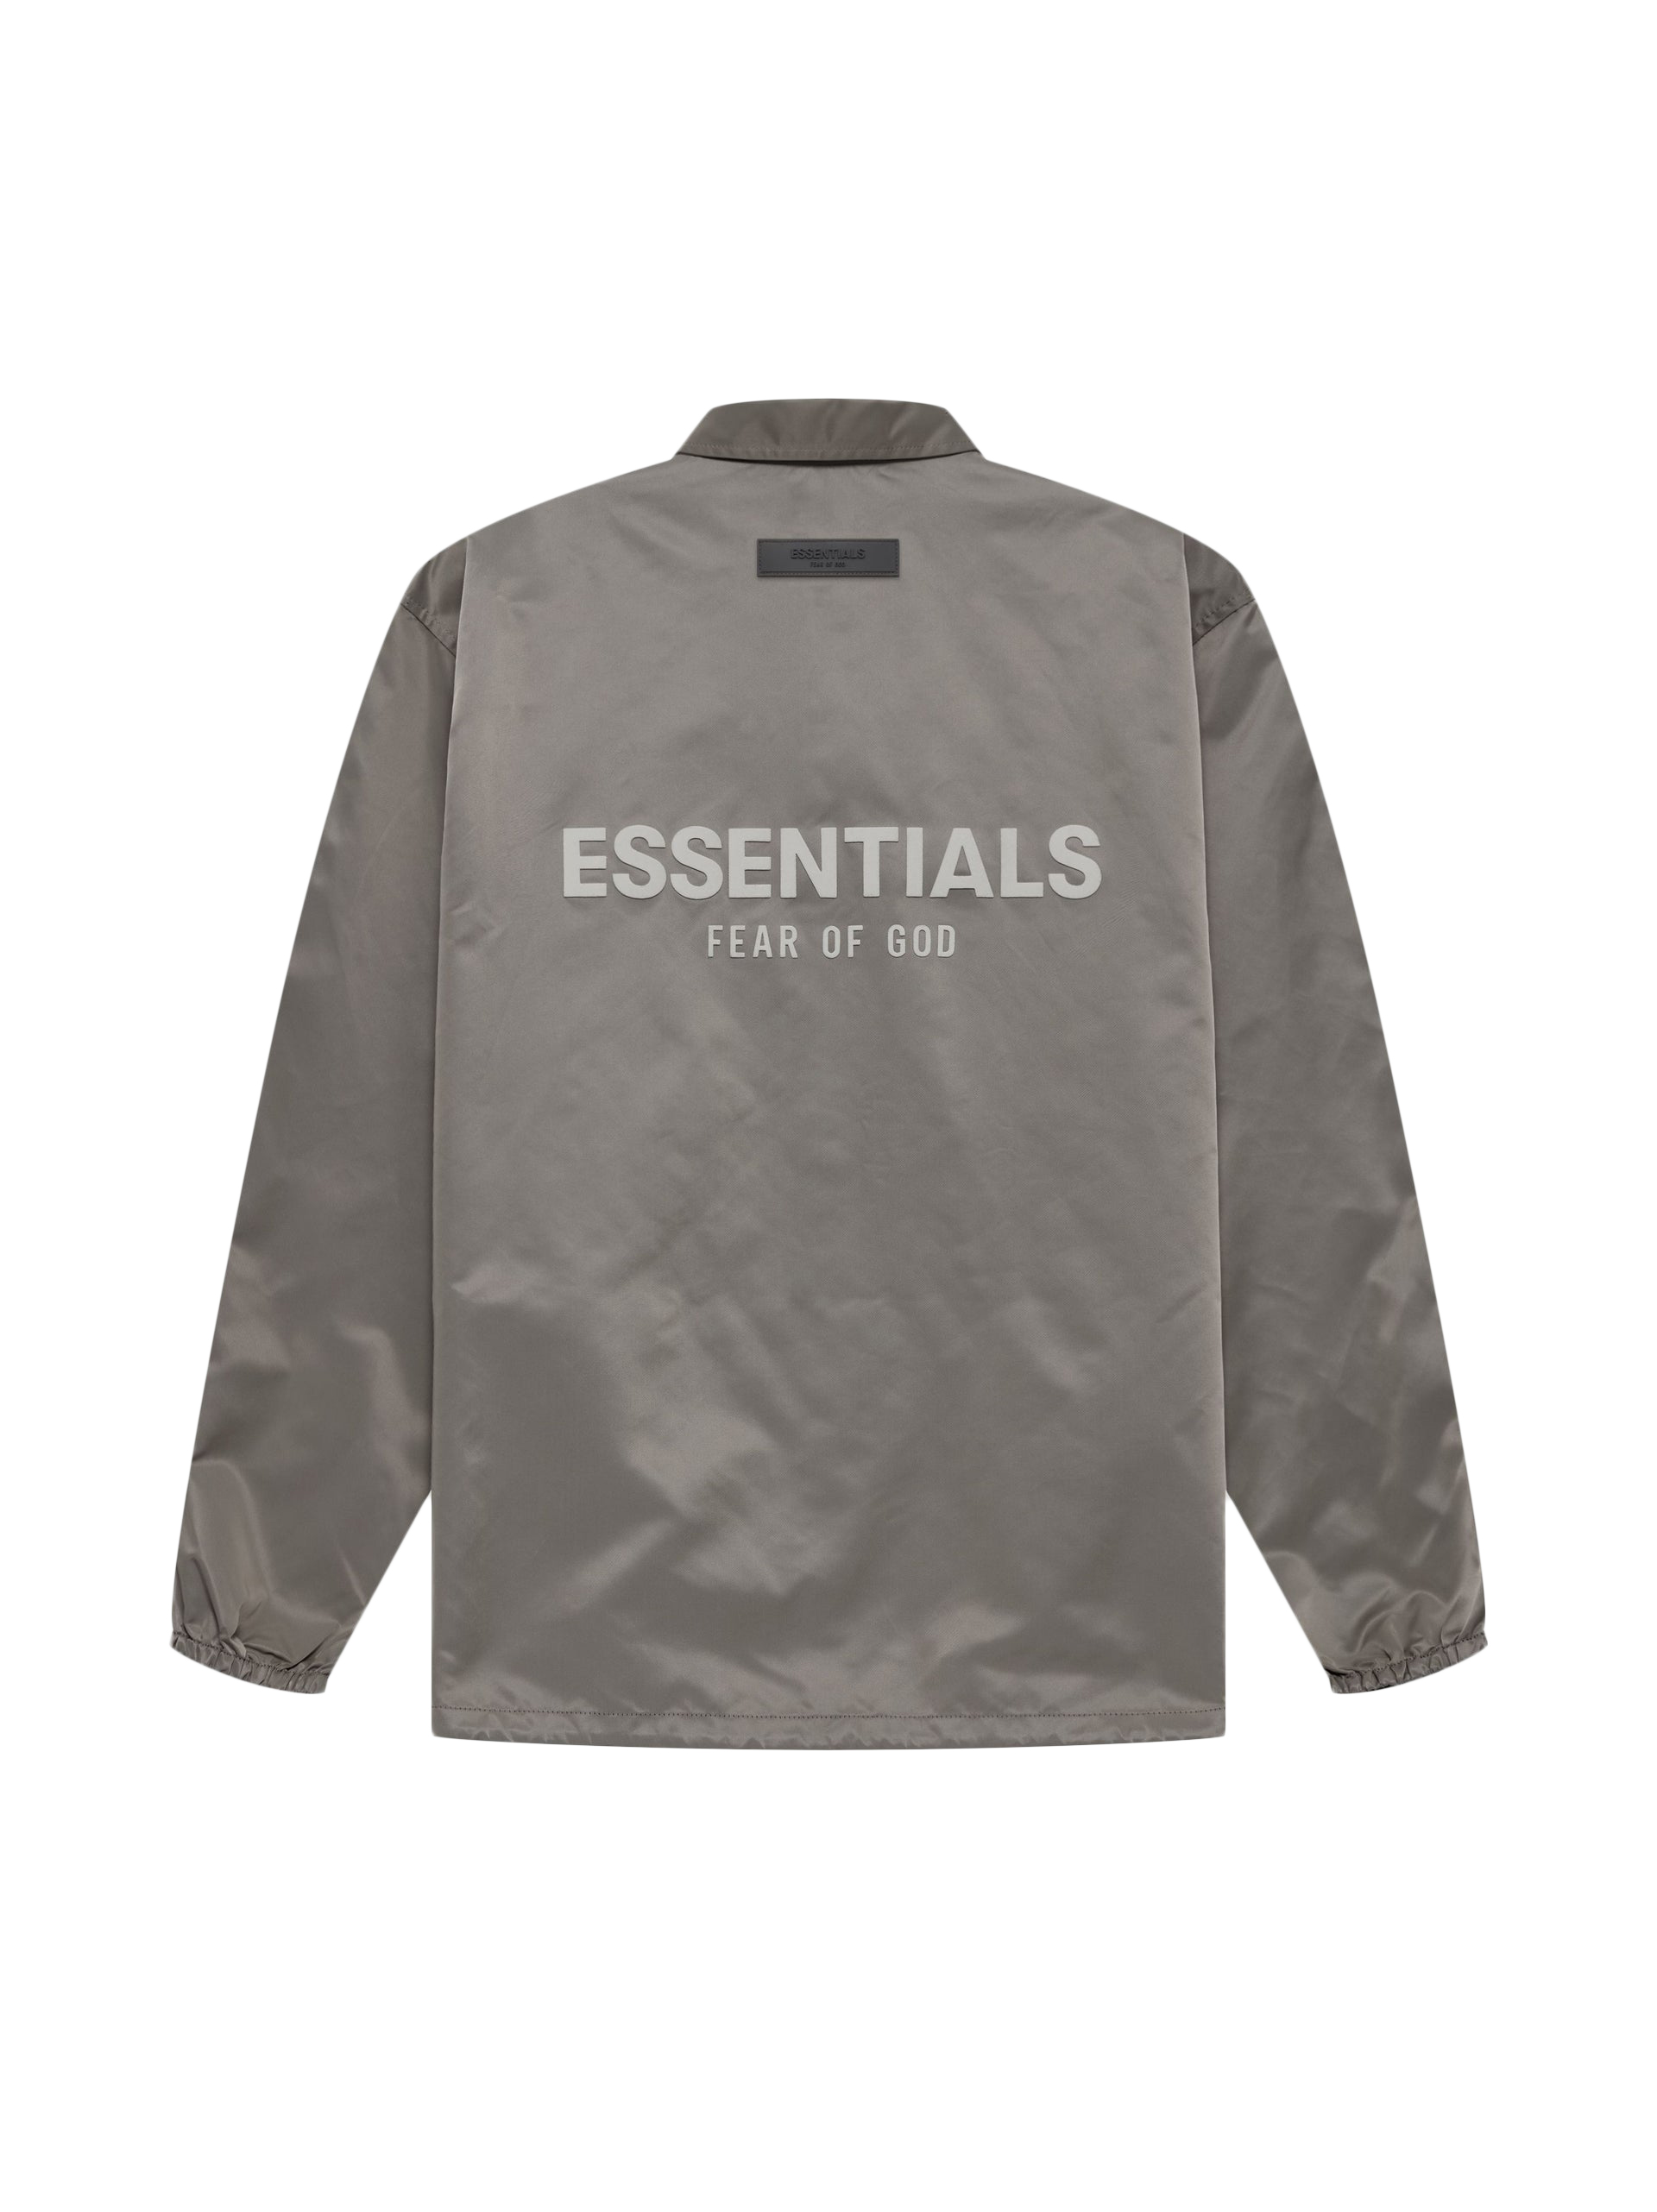 Buy Fear of God Essentials Jackets Streetwear - StockX